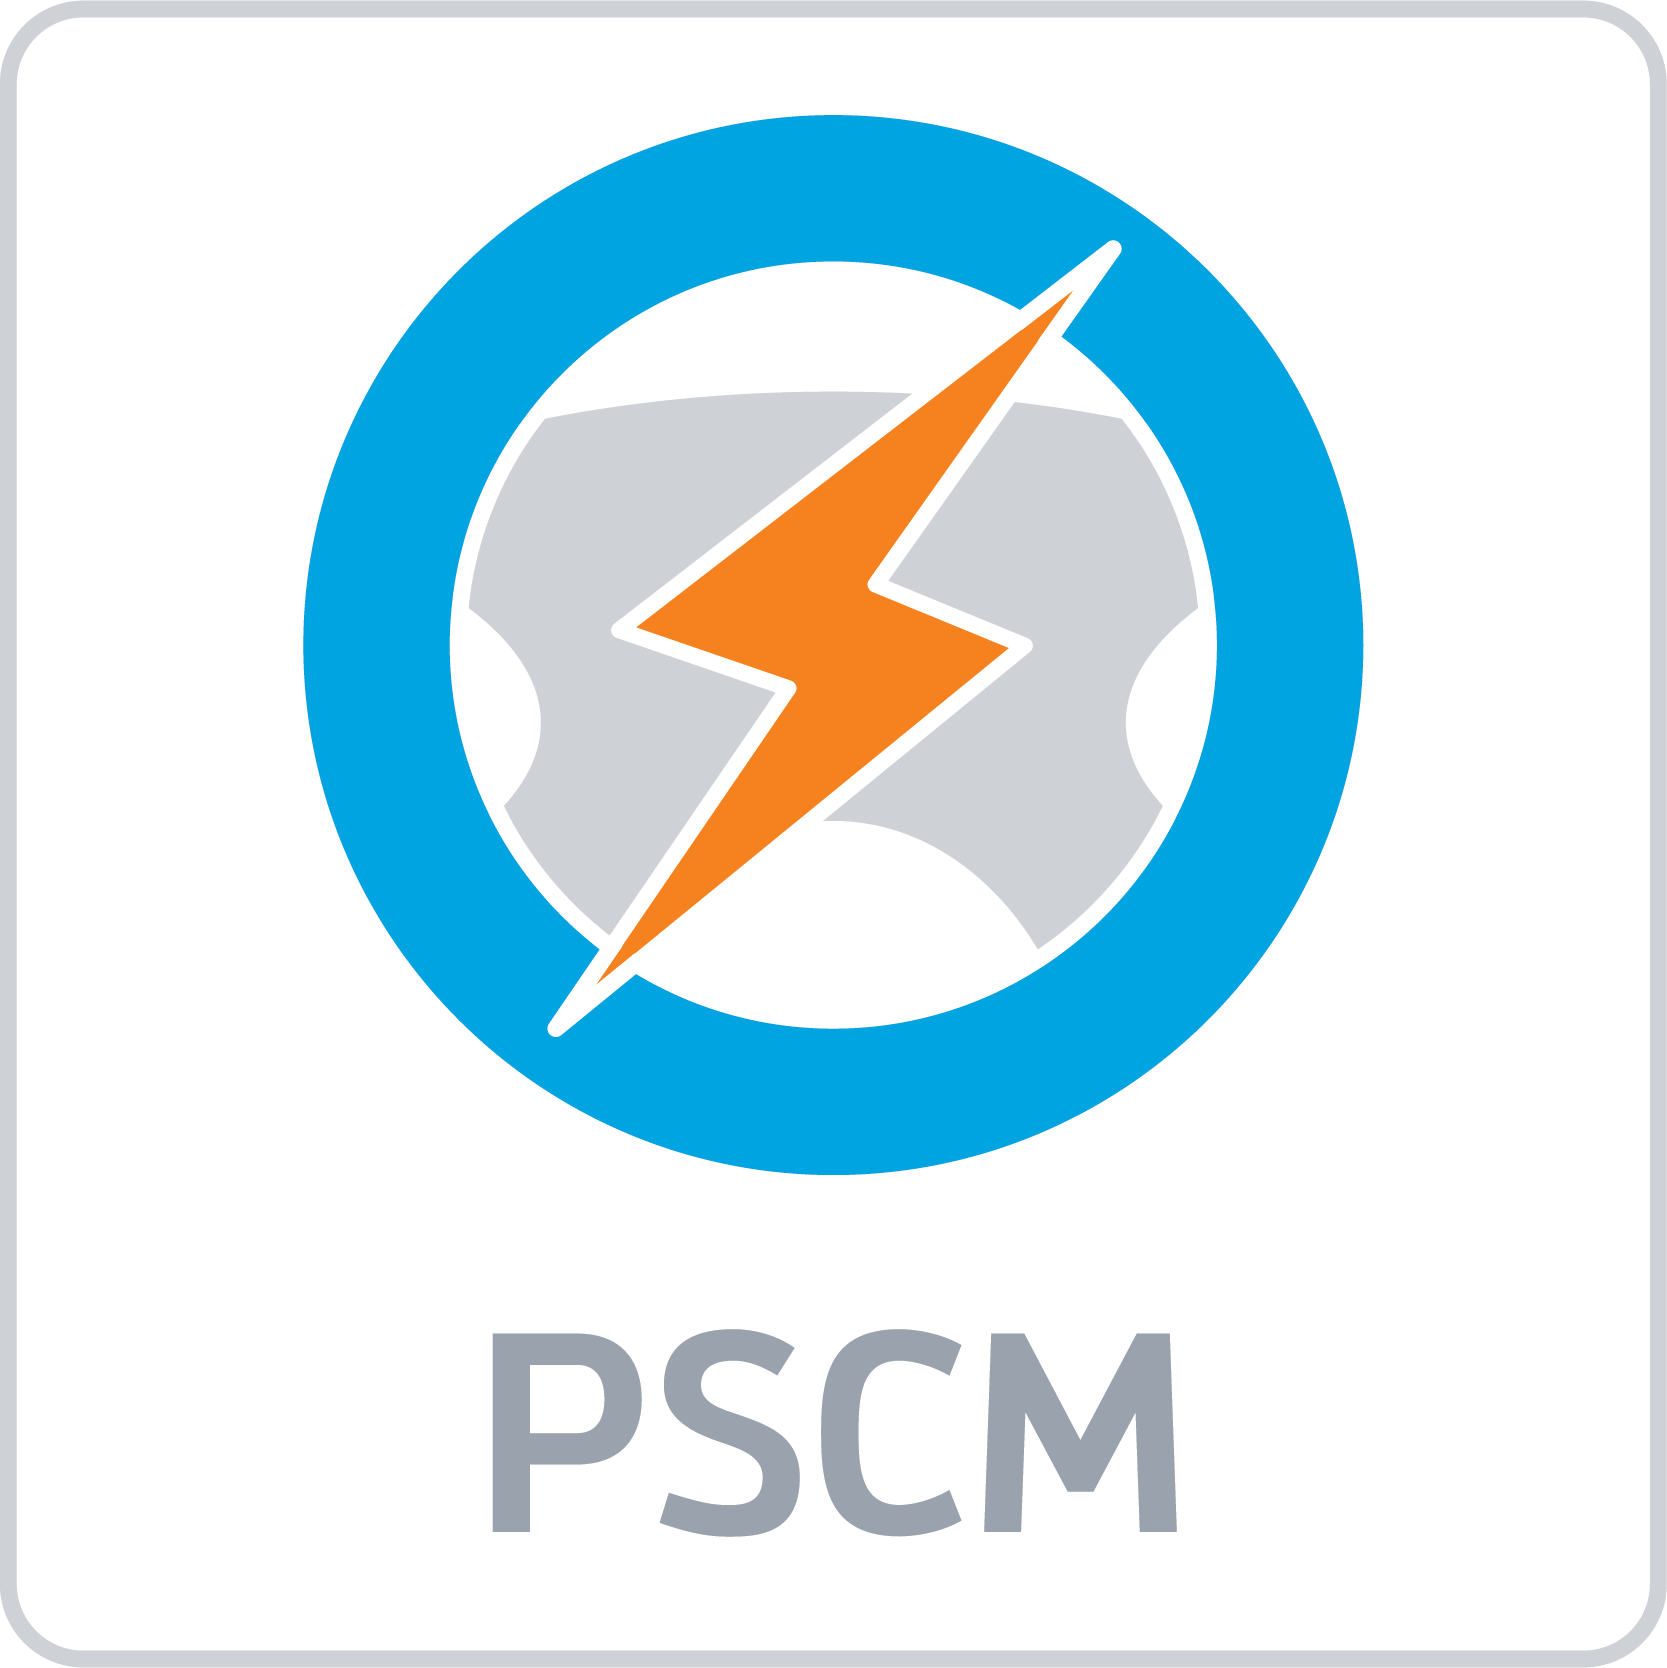 Chrysler Power Steering Control Module (PSCM)